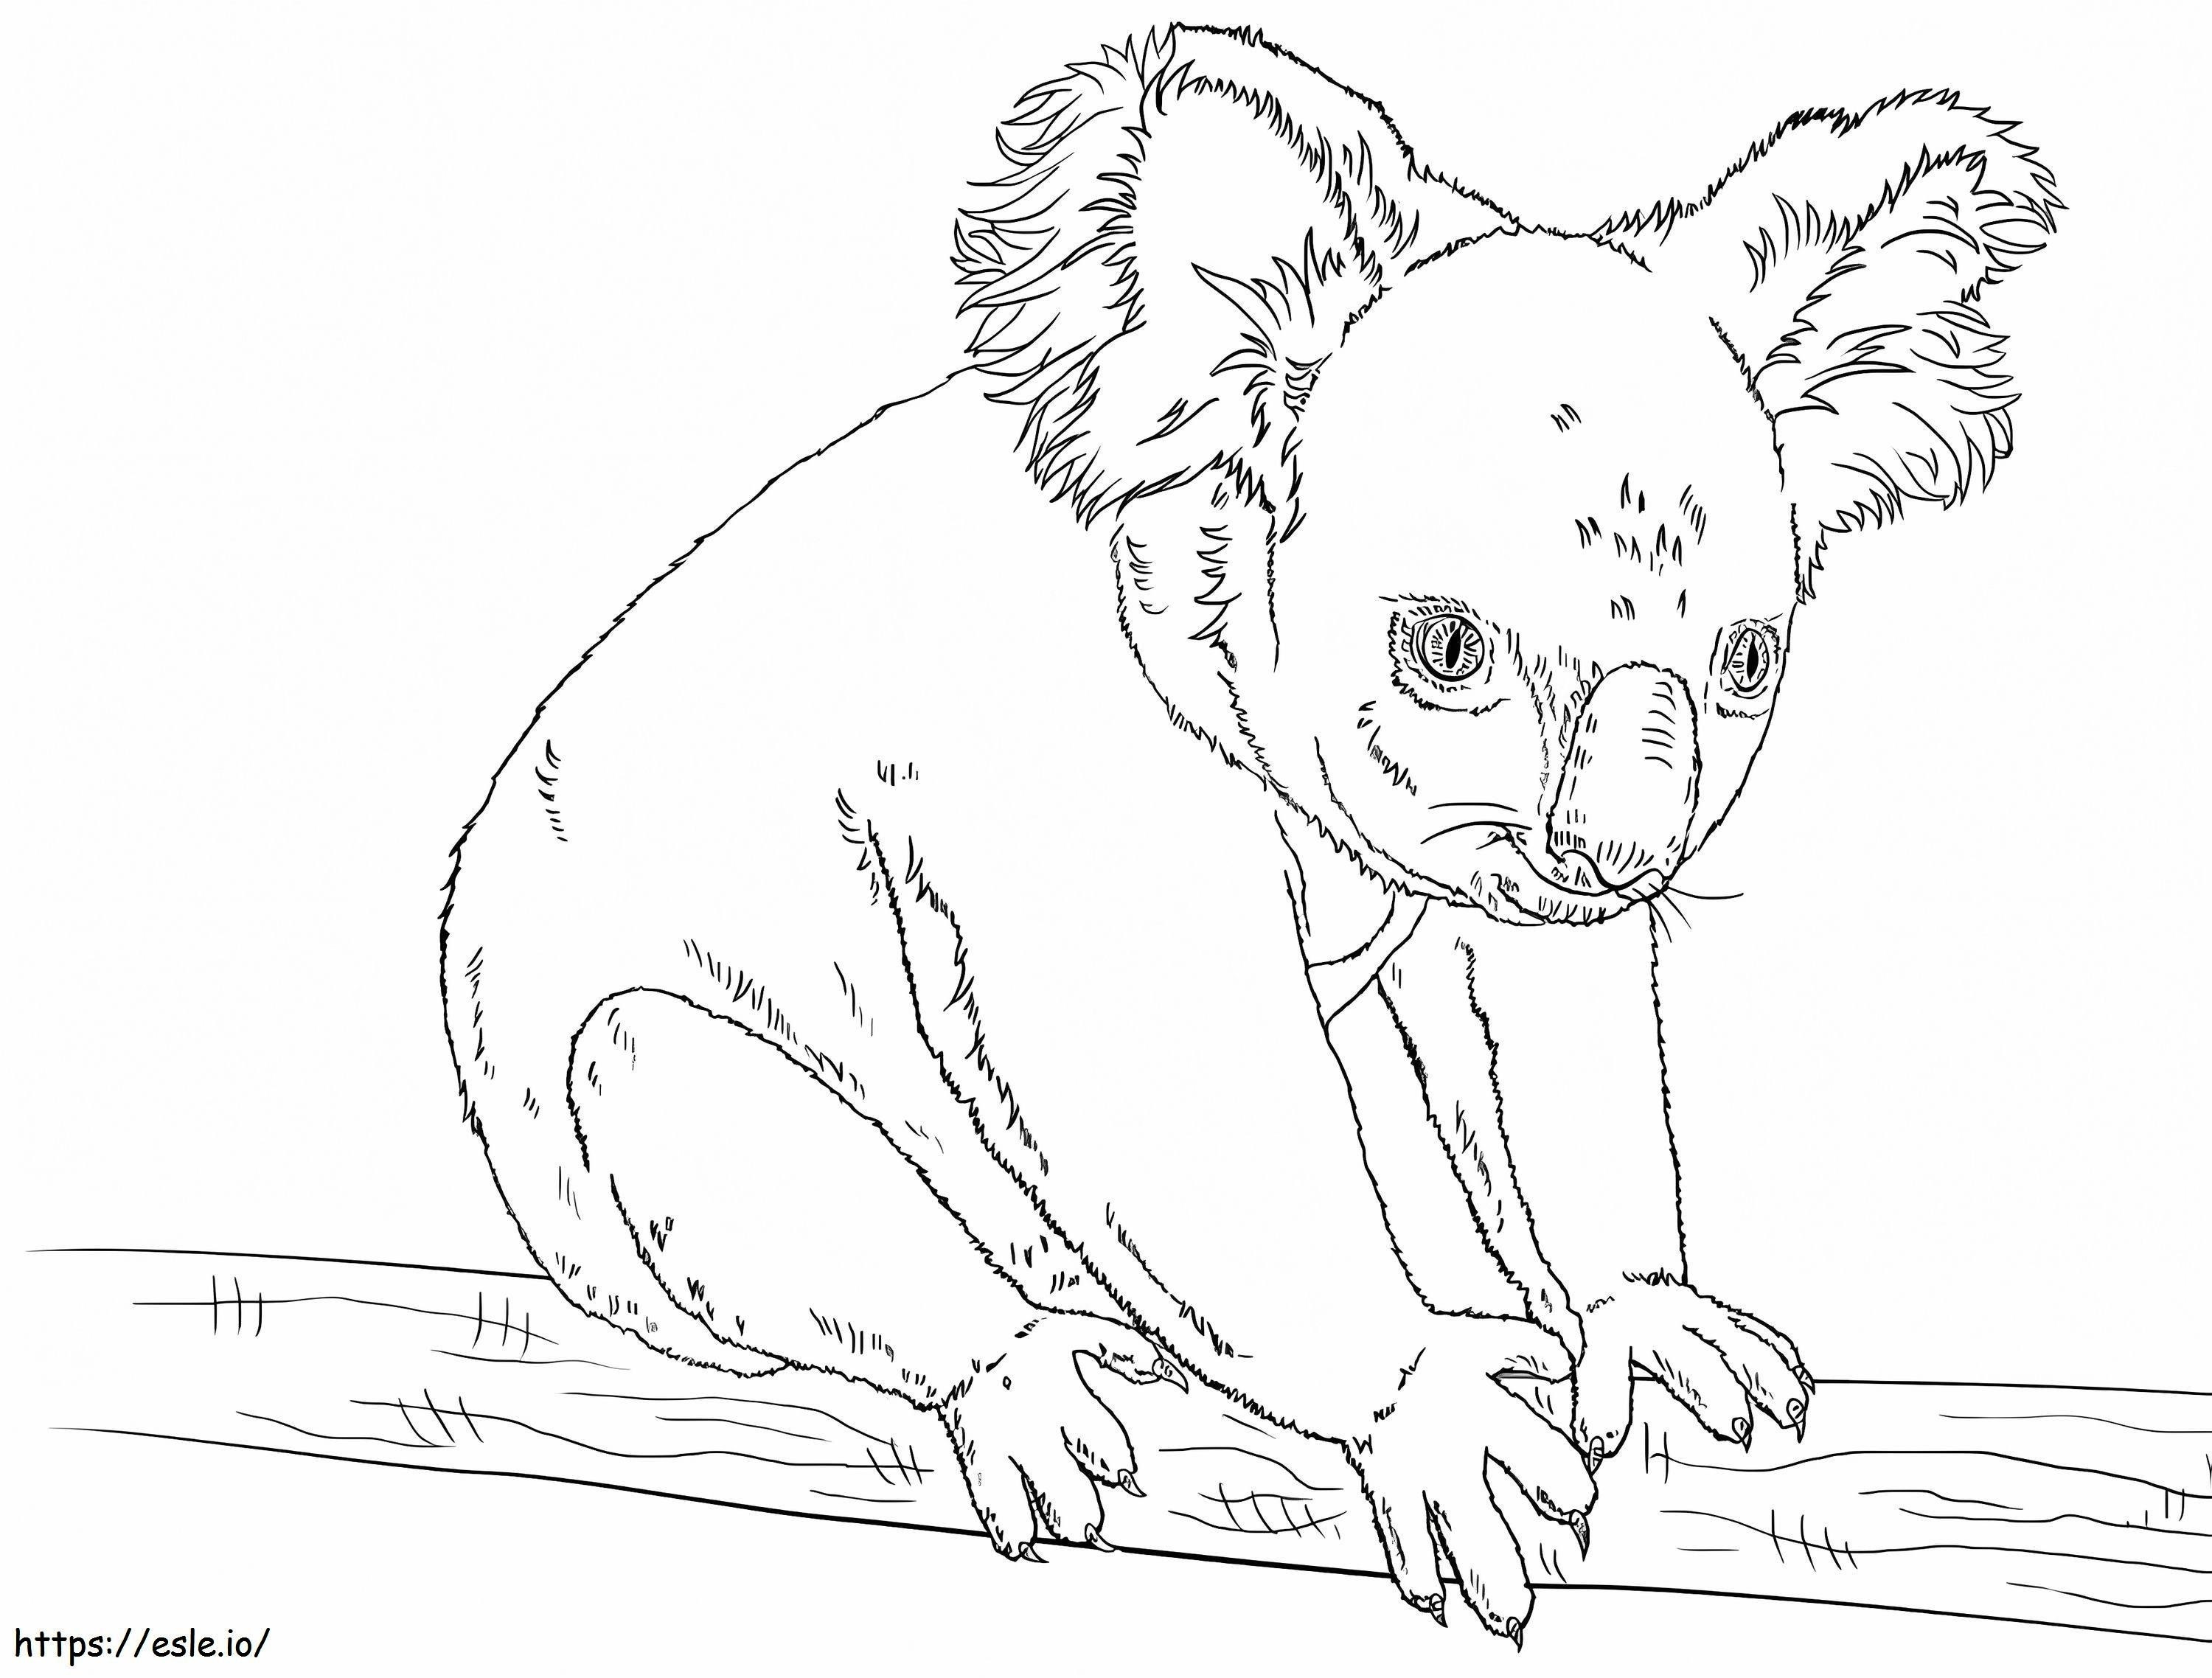  Koala ausmalbilder